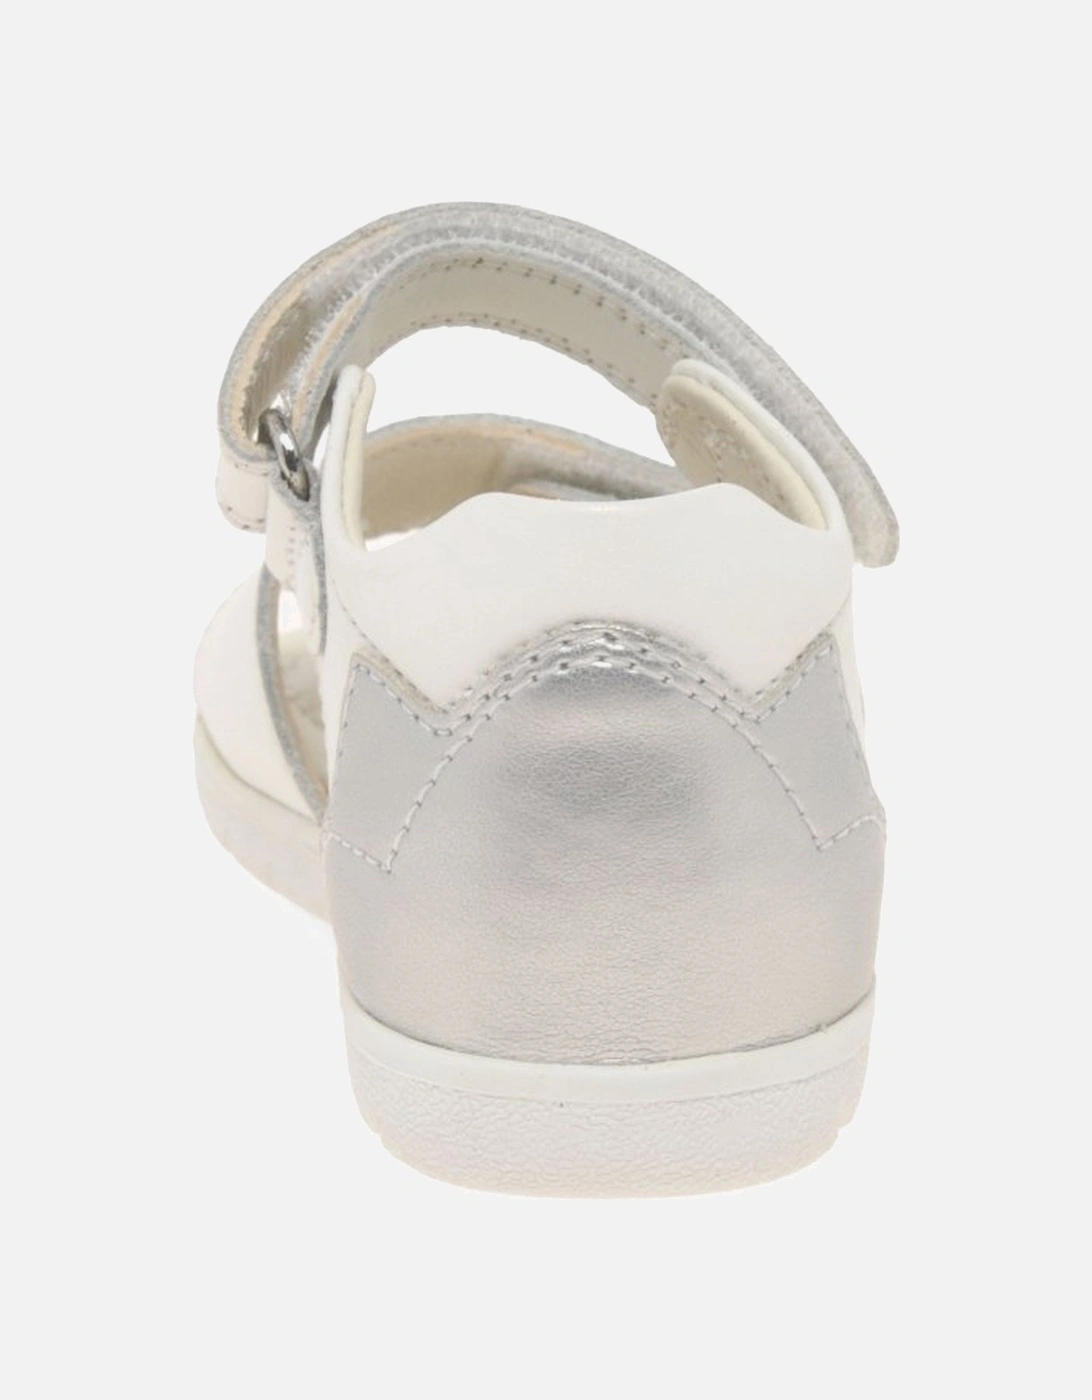 B Alul Girls Infant Sandals